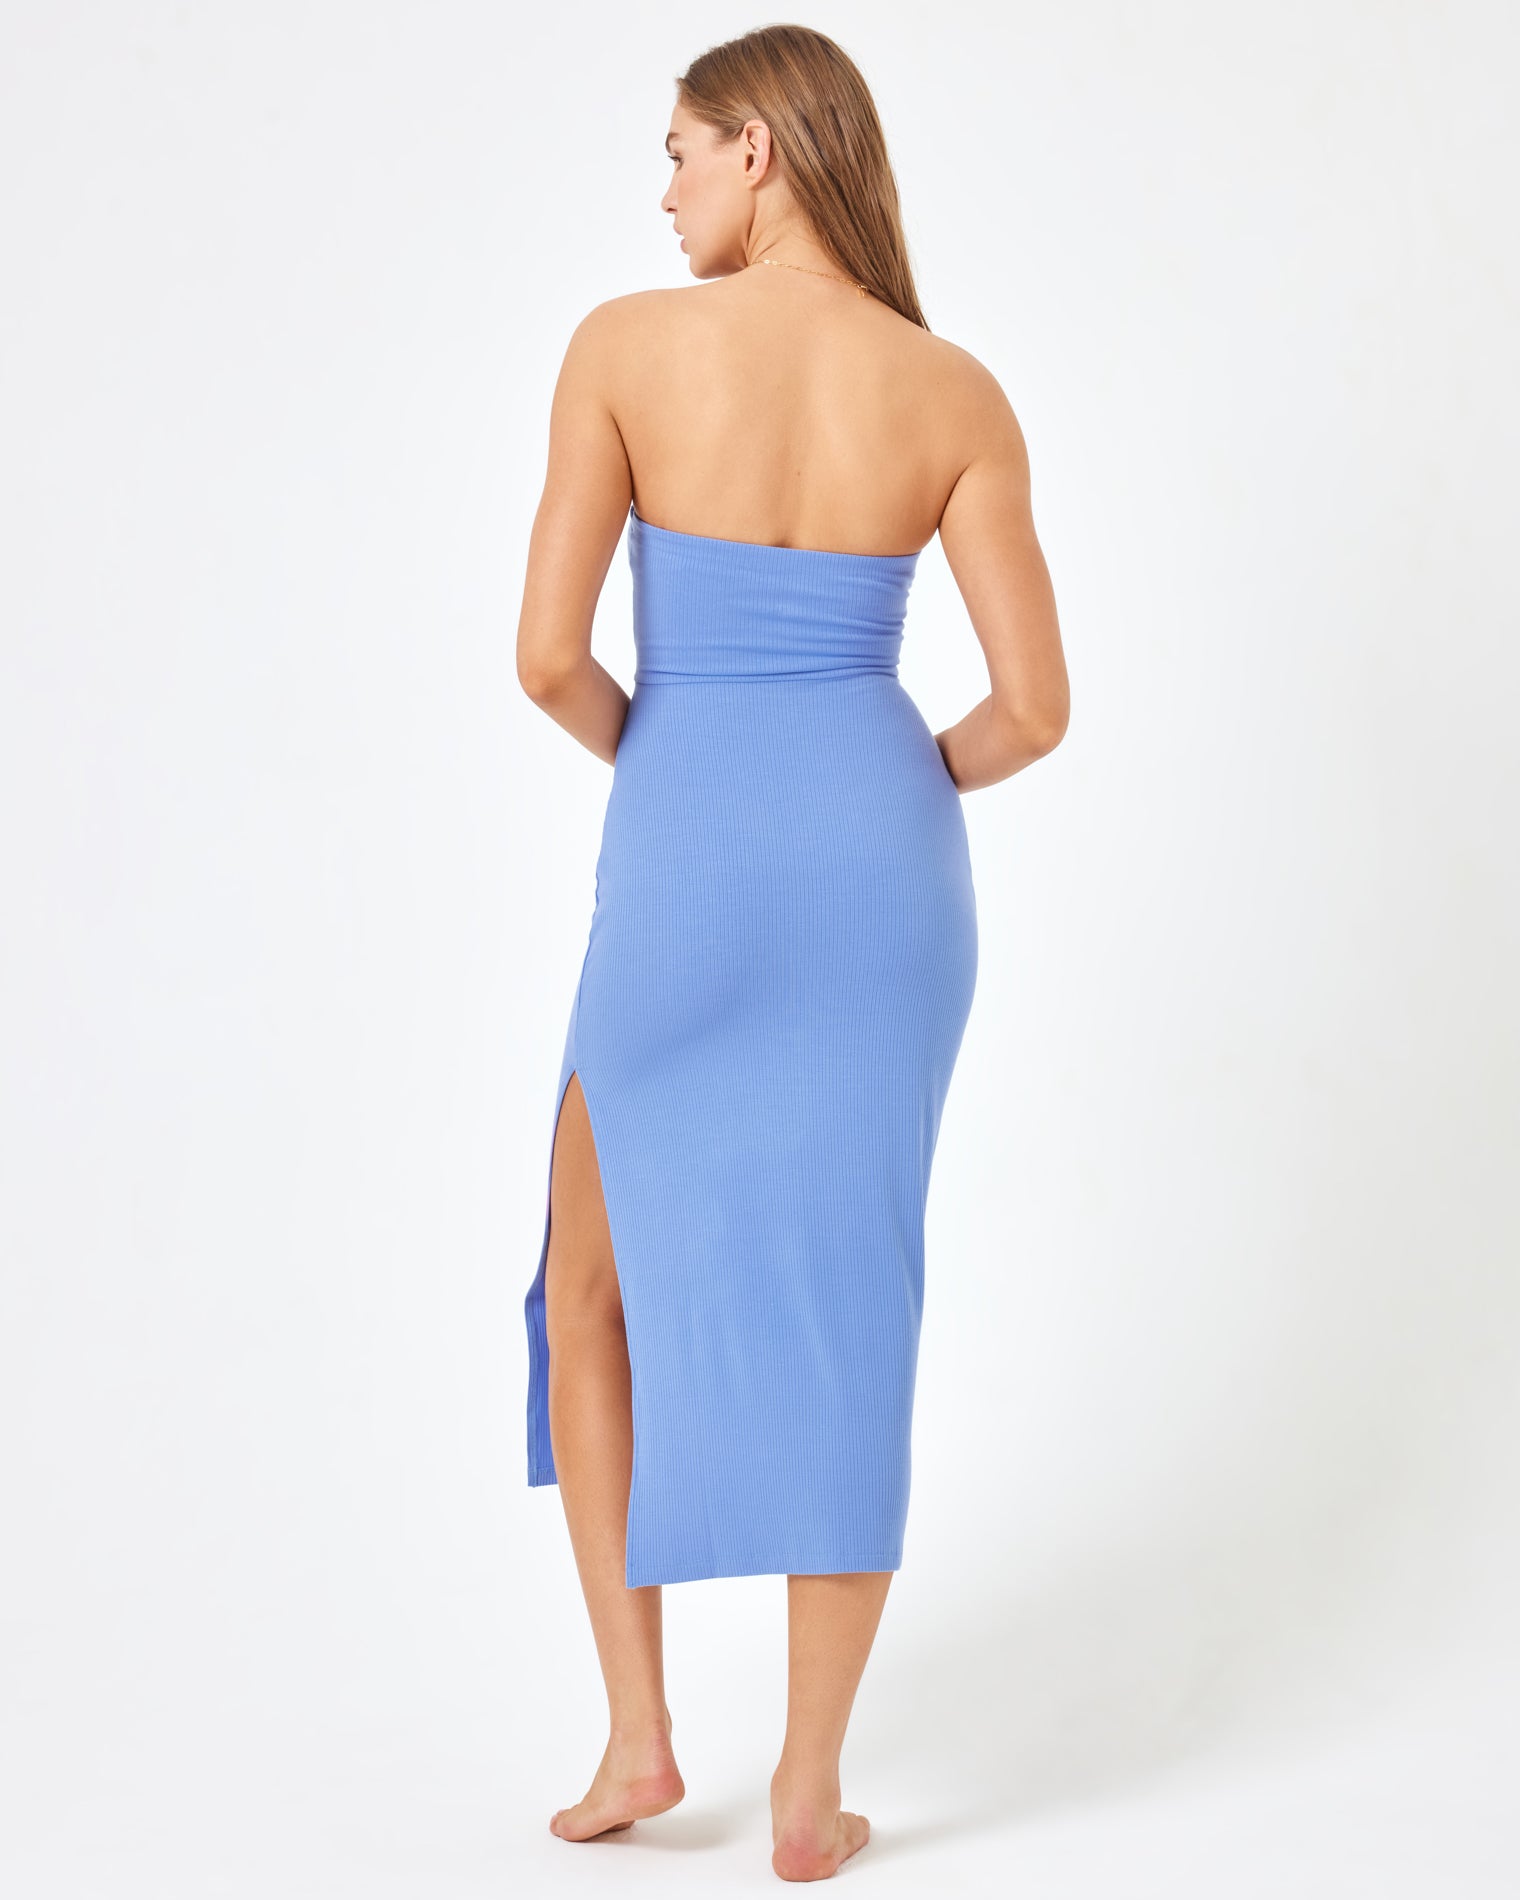 LSPACE X Anthropologie Kierra Dress - Peri Blue Peri Blue | Model: Daria (size: S)